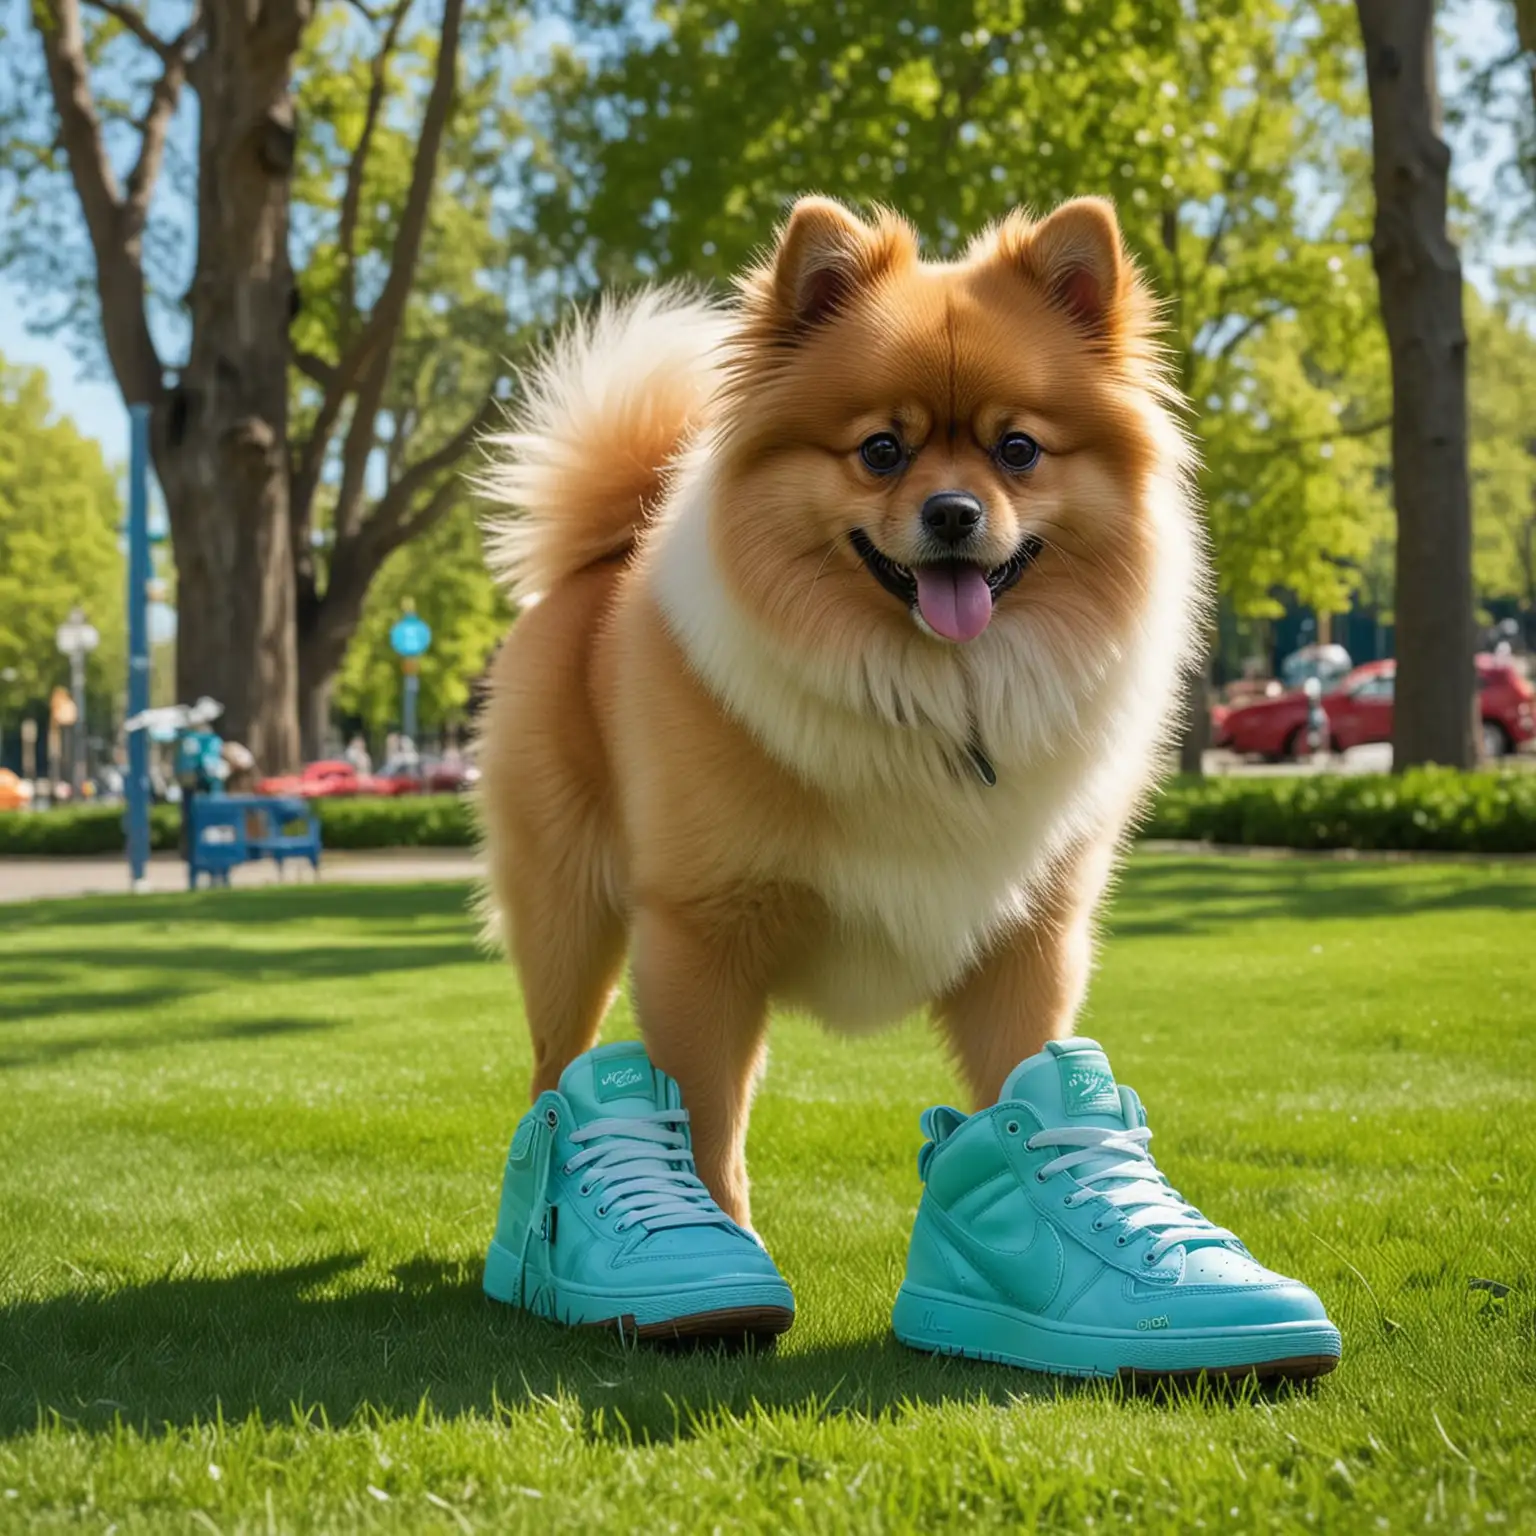 Curious Pomeranian Dog Beside Oversized Neon Sneakers in Urban Park